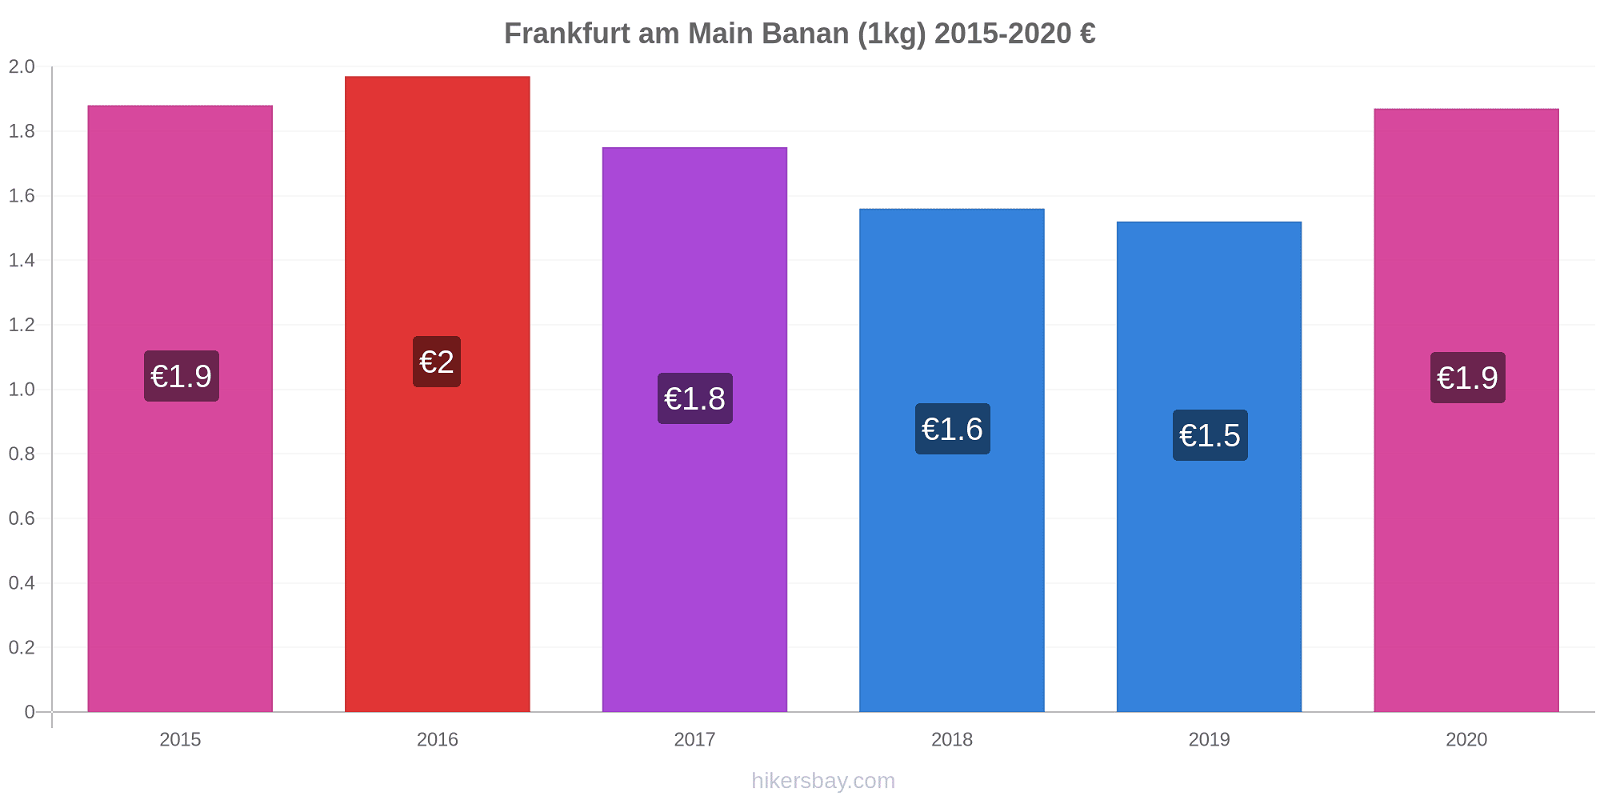 Frankfurt am Main prisændringer Banan (1kg) hikersbay.com